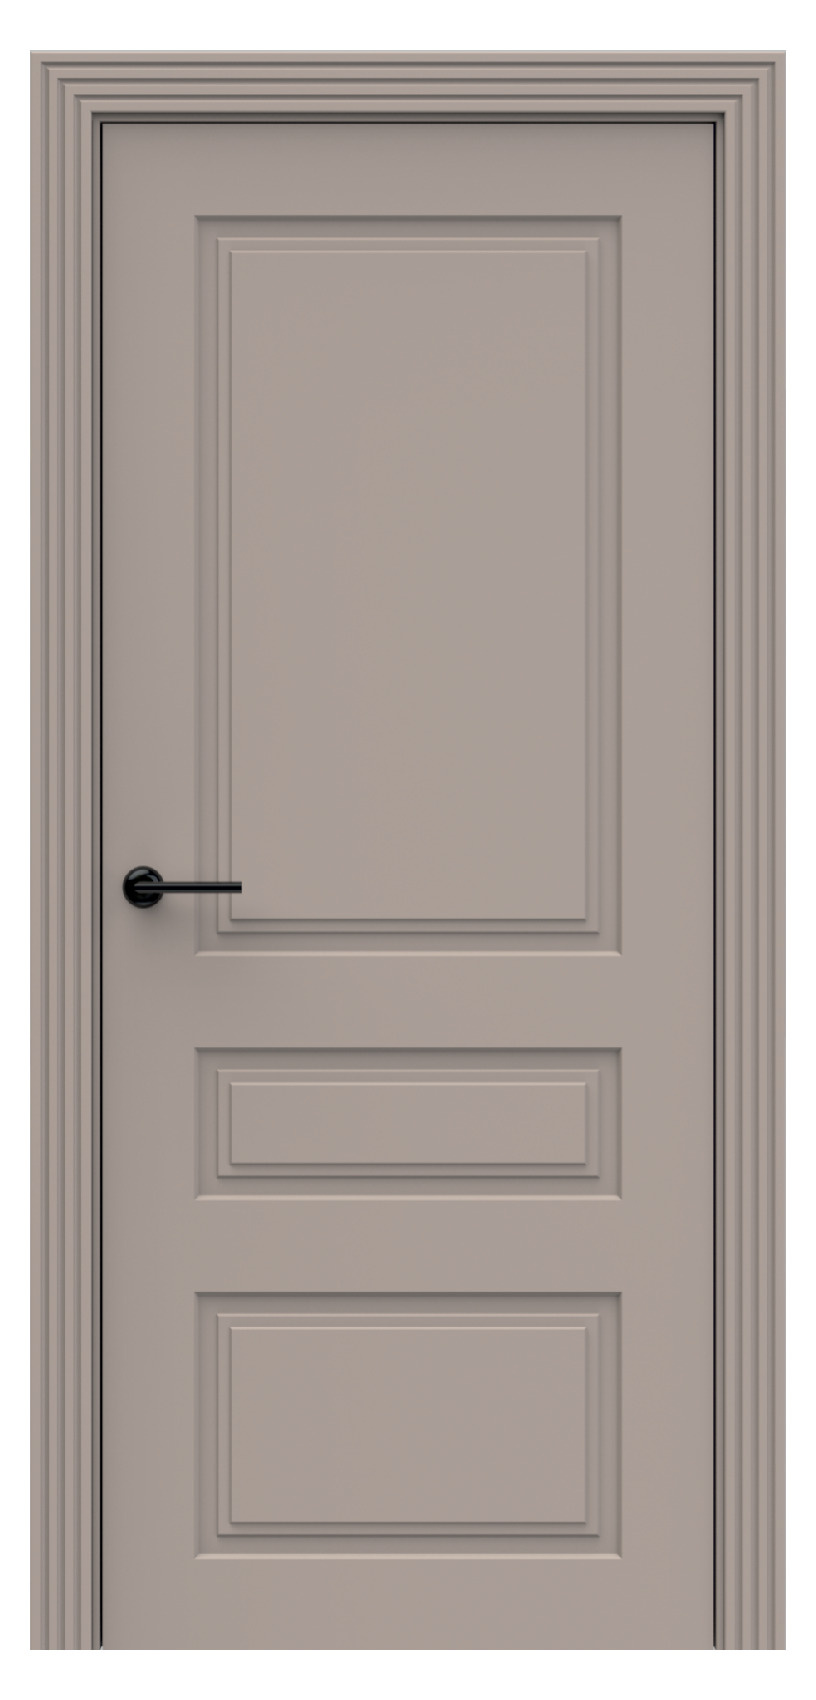 Questdoors Межкомнатная дверь QI3, арт. 17964 - фото №1